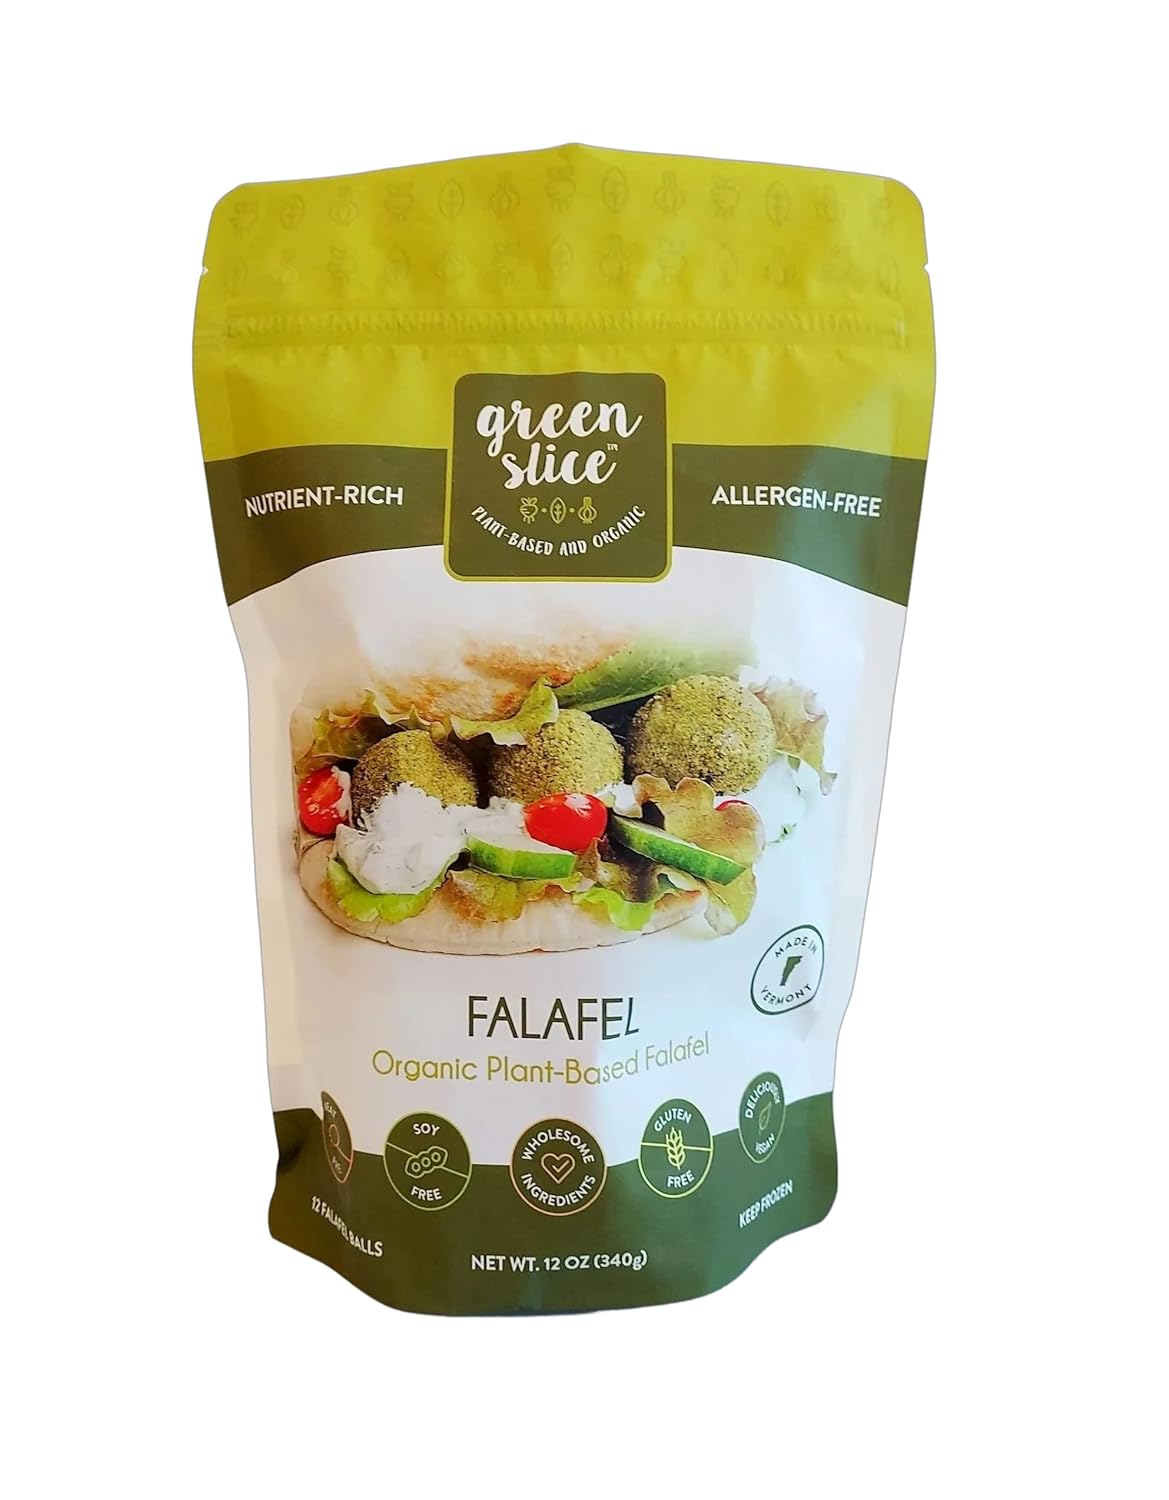 Green Slice Falafel 6/12oz Bags | Natural, non-gmo mediterranean meatless meatballs | Vegan, allergen-free, made in Vermont